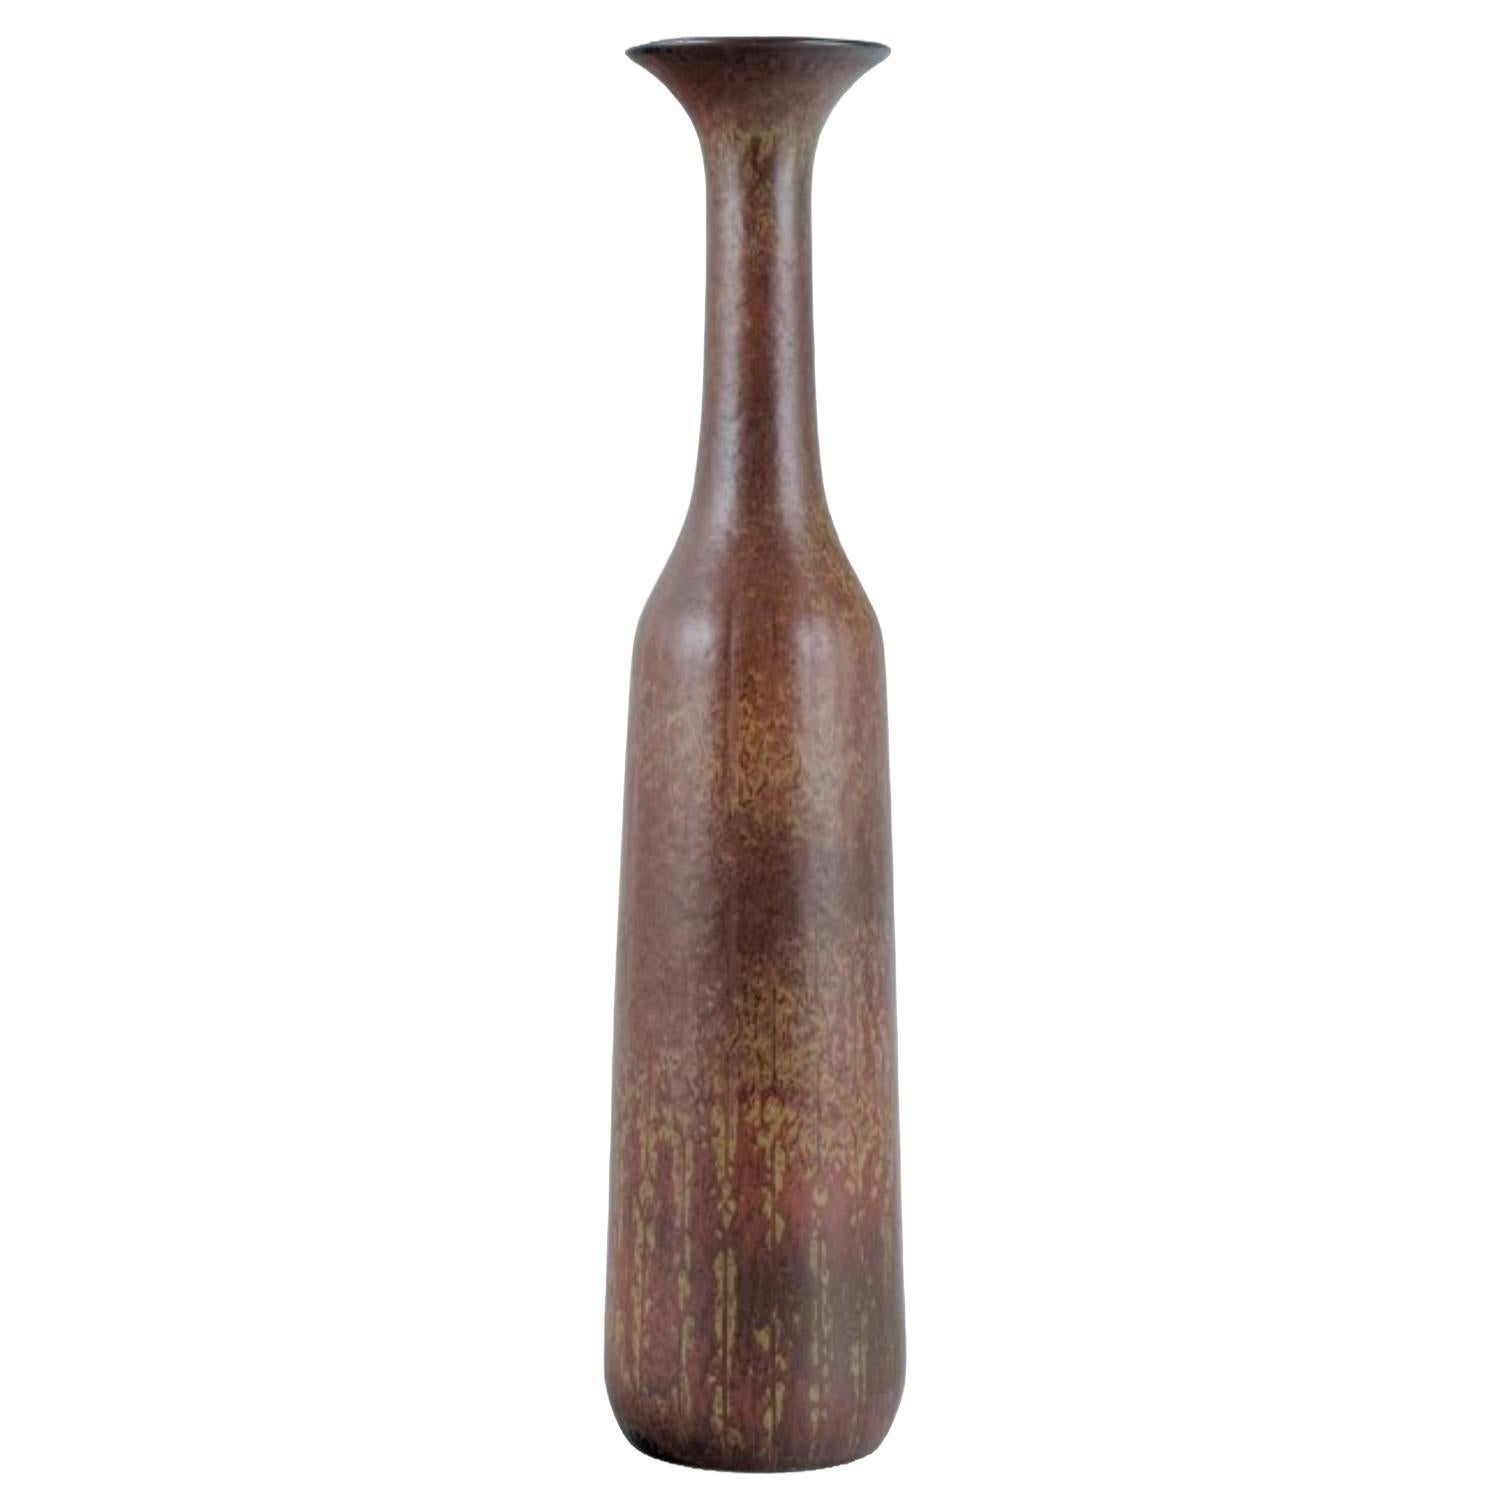 Gunnar Nylund for Rörstrand. Large ceramic vase with brown glaze.